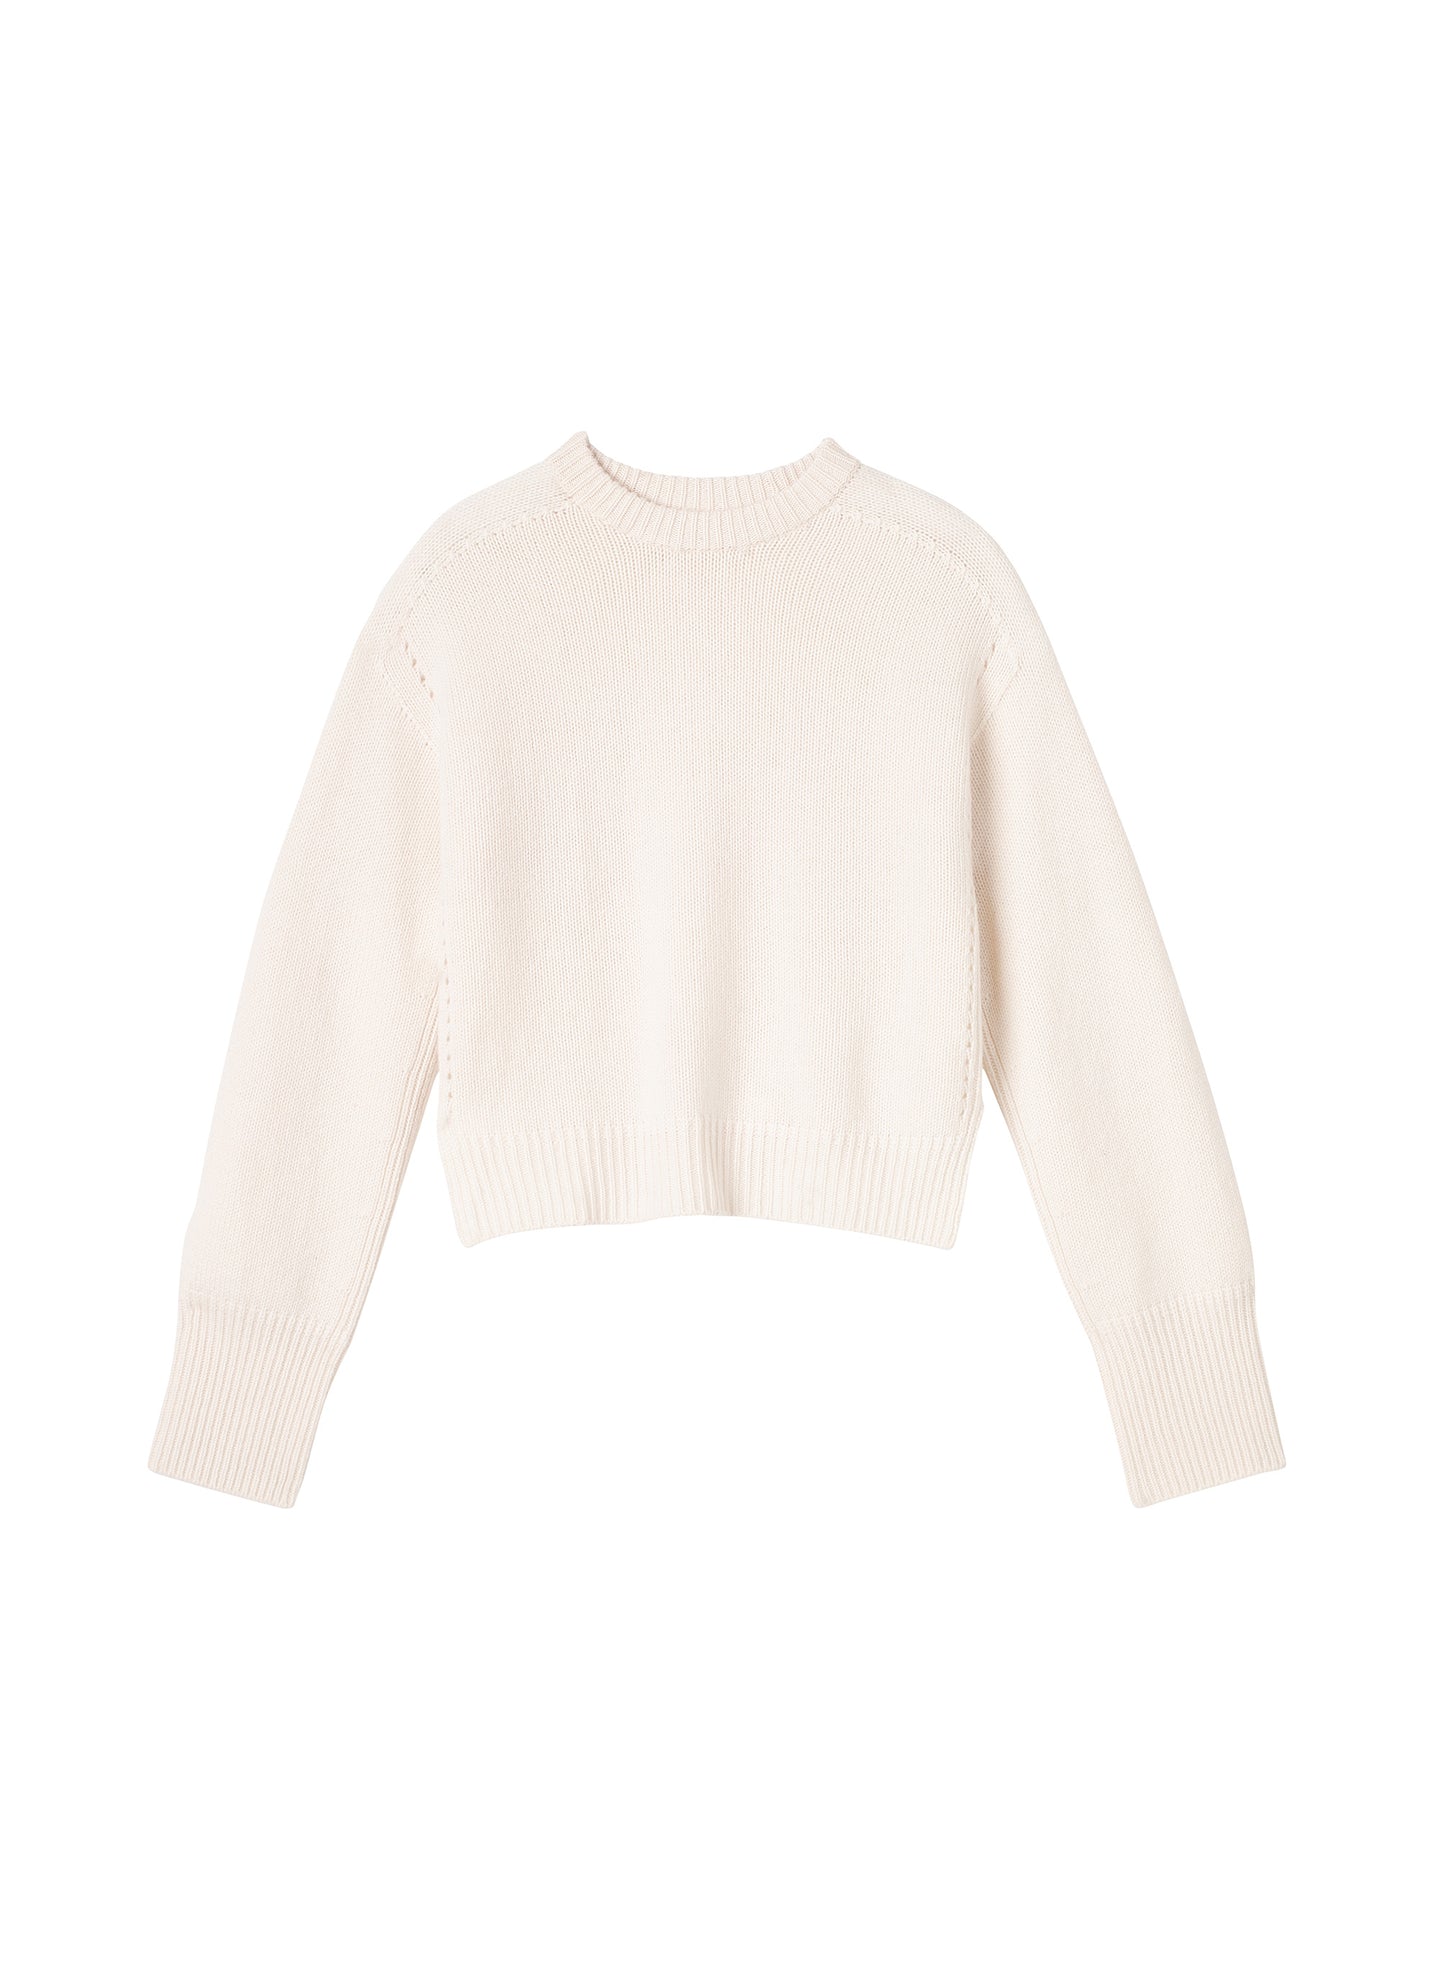 flatlay of white sweater